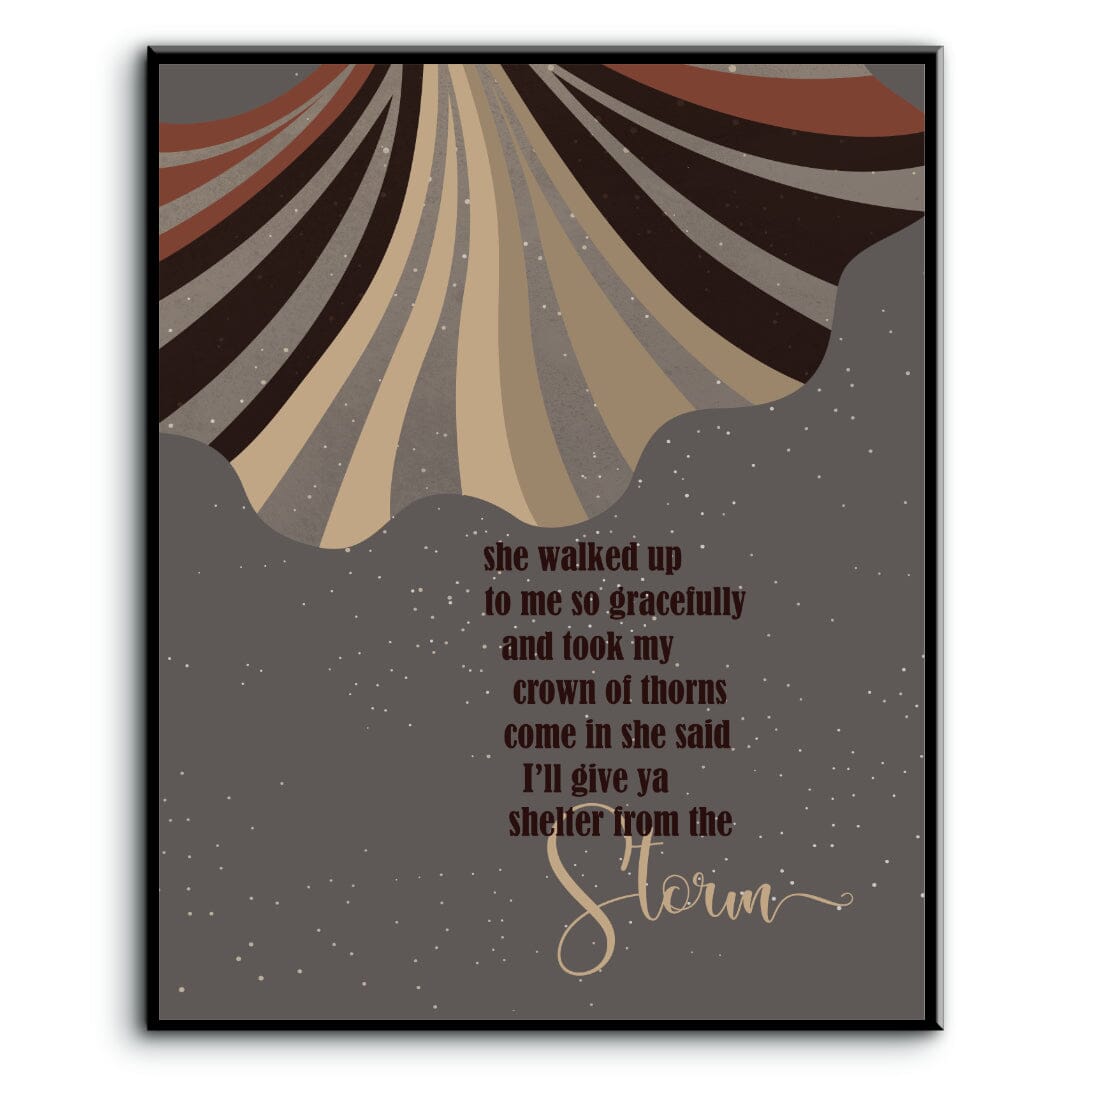 Shelter from the Storm by Bob Dylan - Rock Music Print Art Song Lyrics Art Song Lyrics Art 8x10 Plaque Mount 